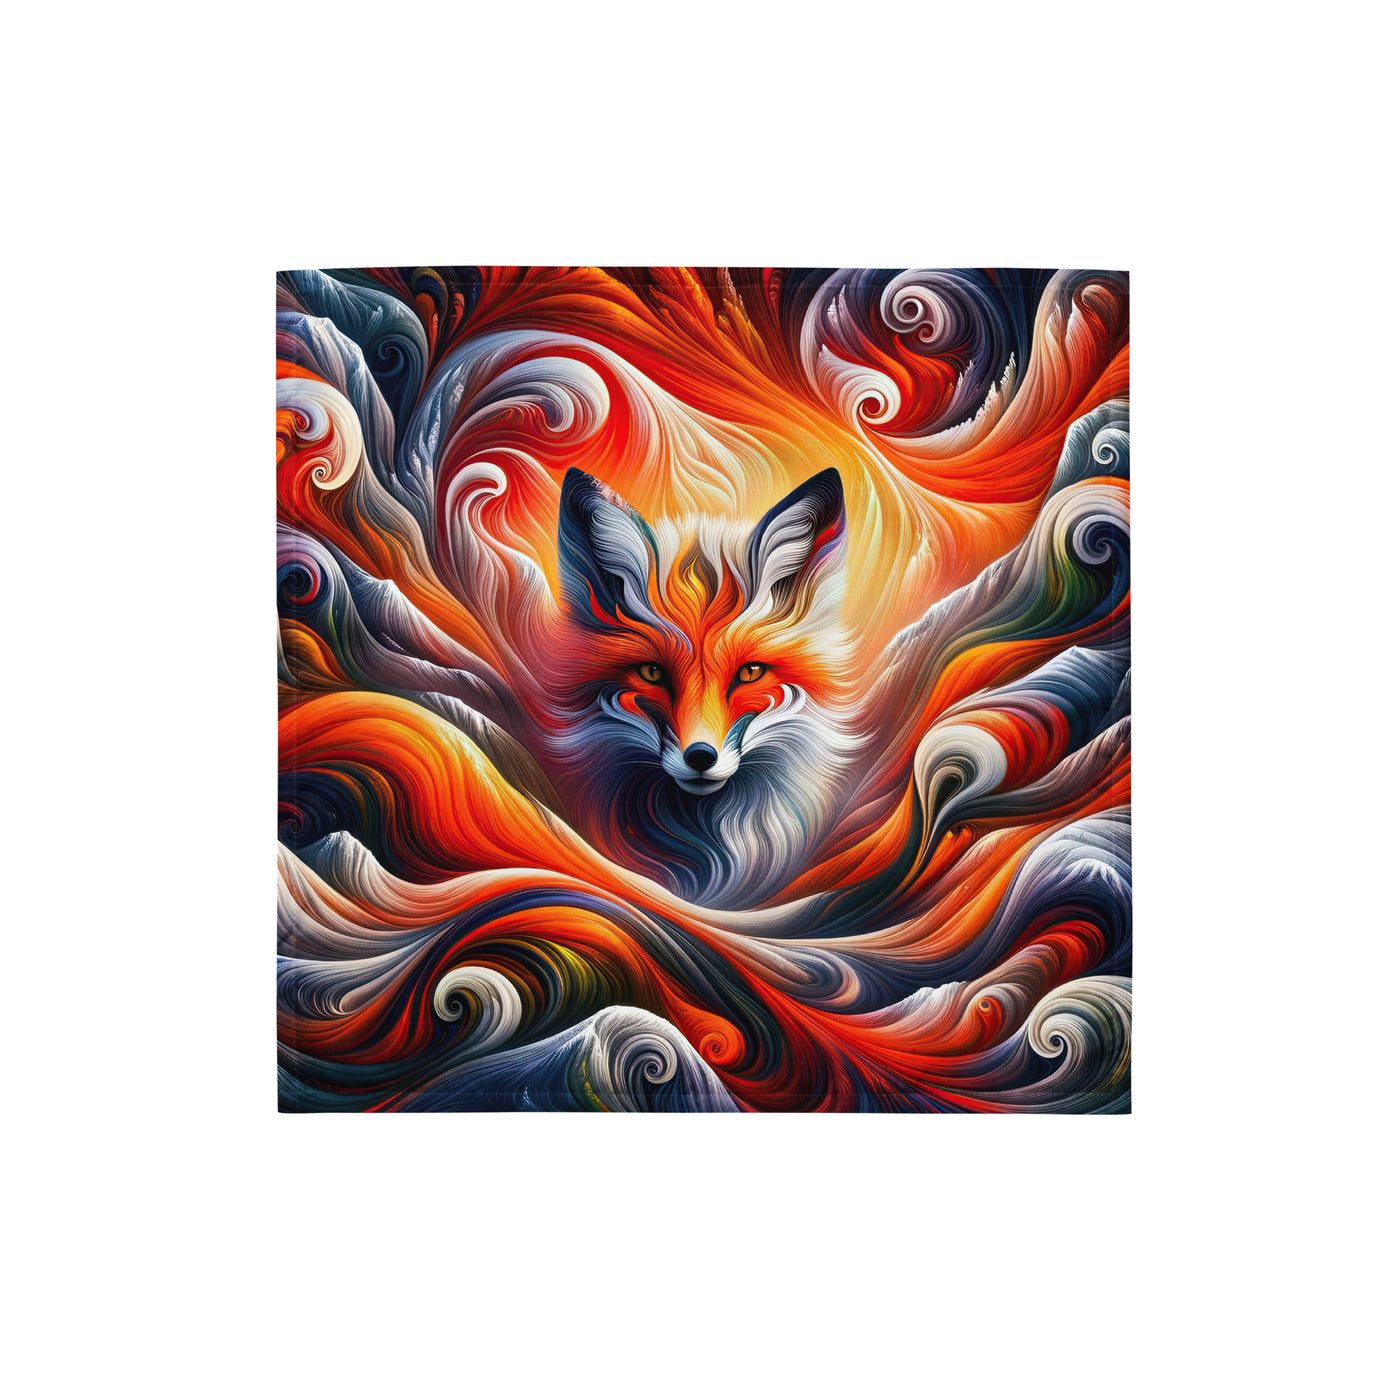 Abstraktes Kunstwerk, das den Geist der Alpen verkörpert. Leuchtender Fuchs in den Farben Orange, Rot, Weiß - Bandana (All-Over Print) camping xxx yyy zzz S